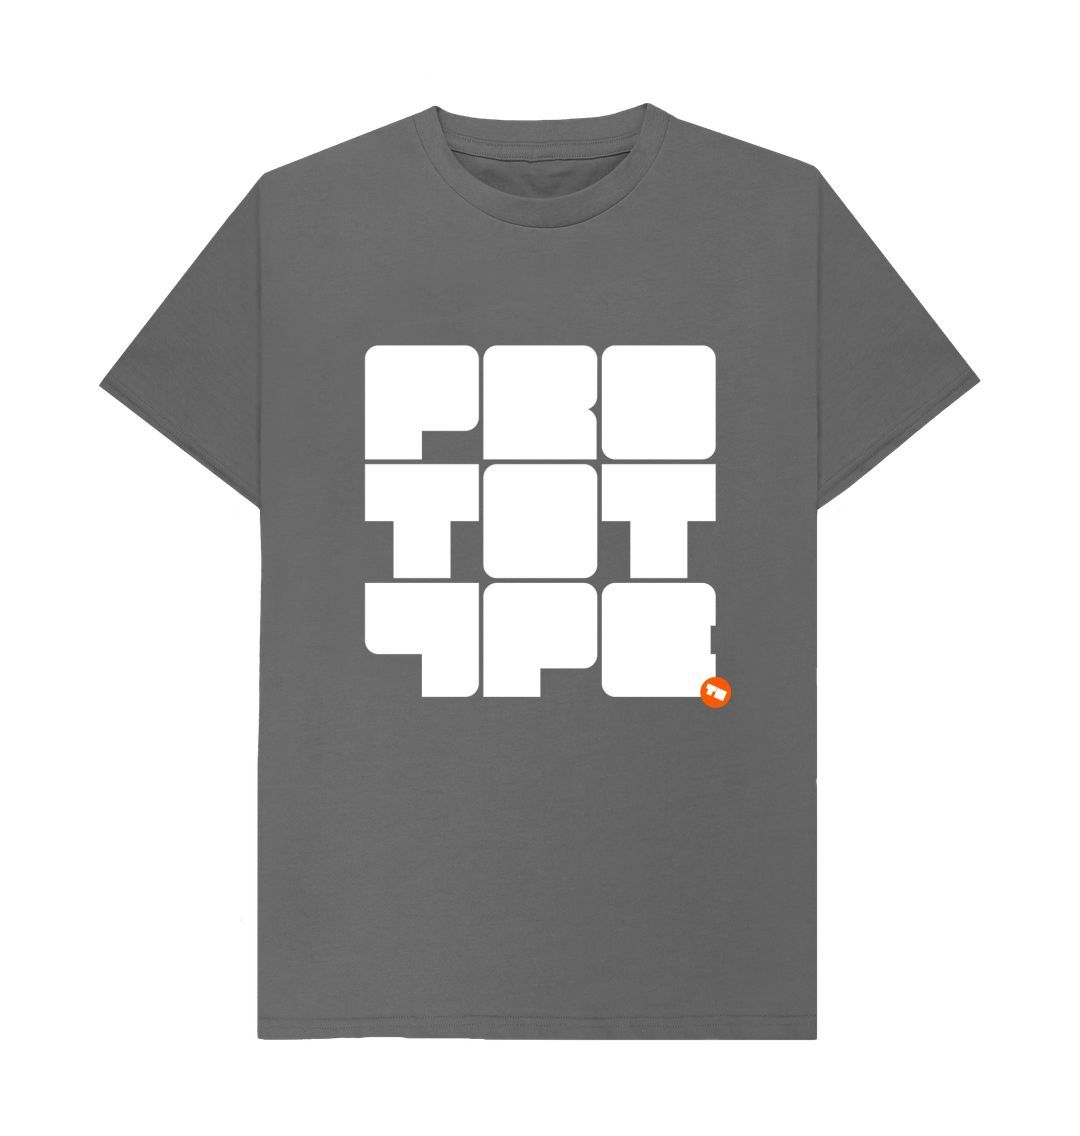 Slate Grey PrototypeTM T-shirts